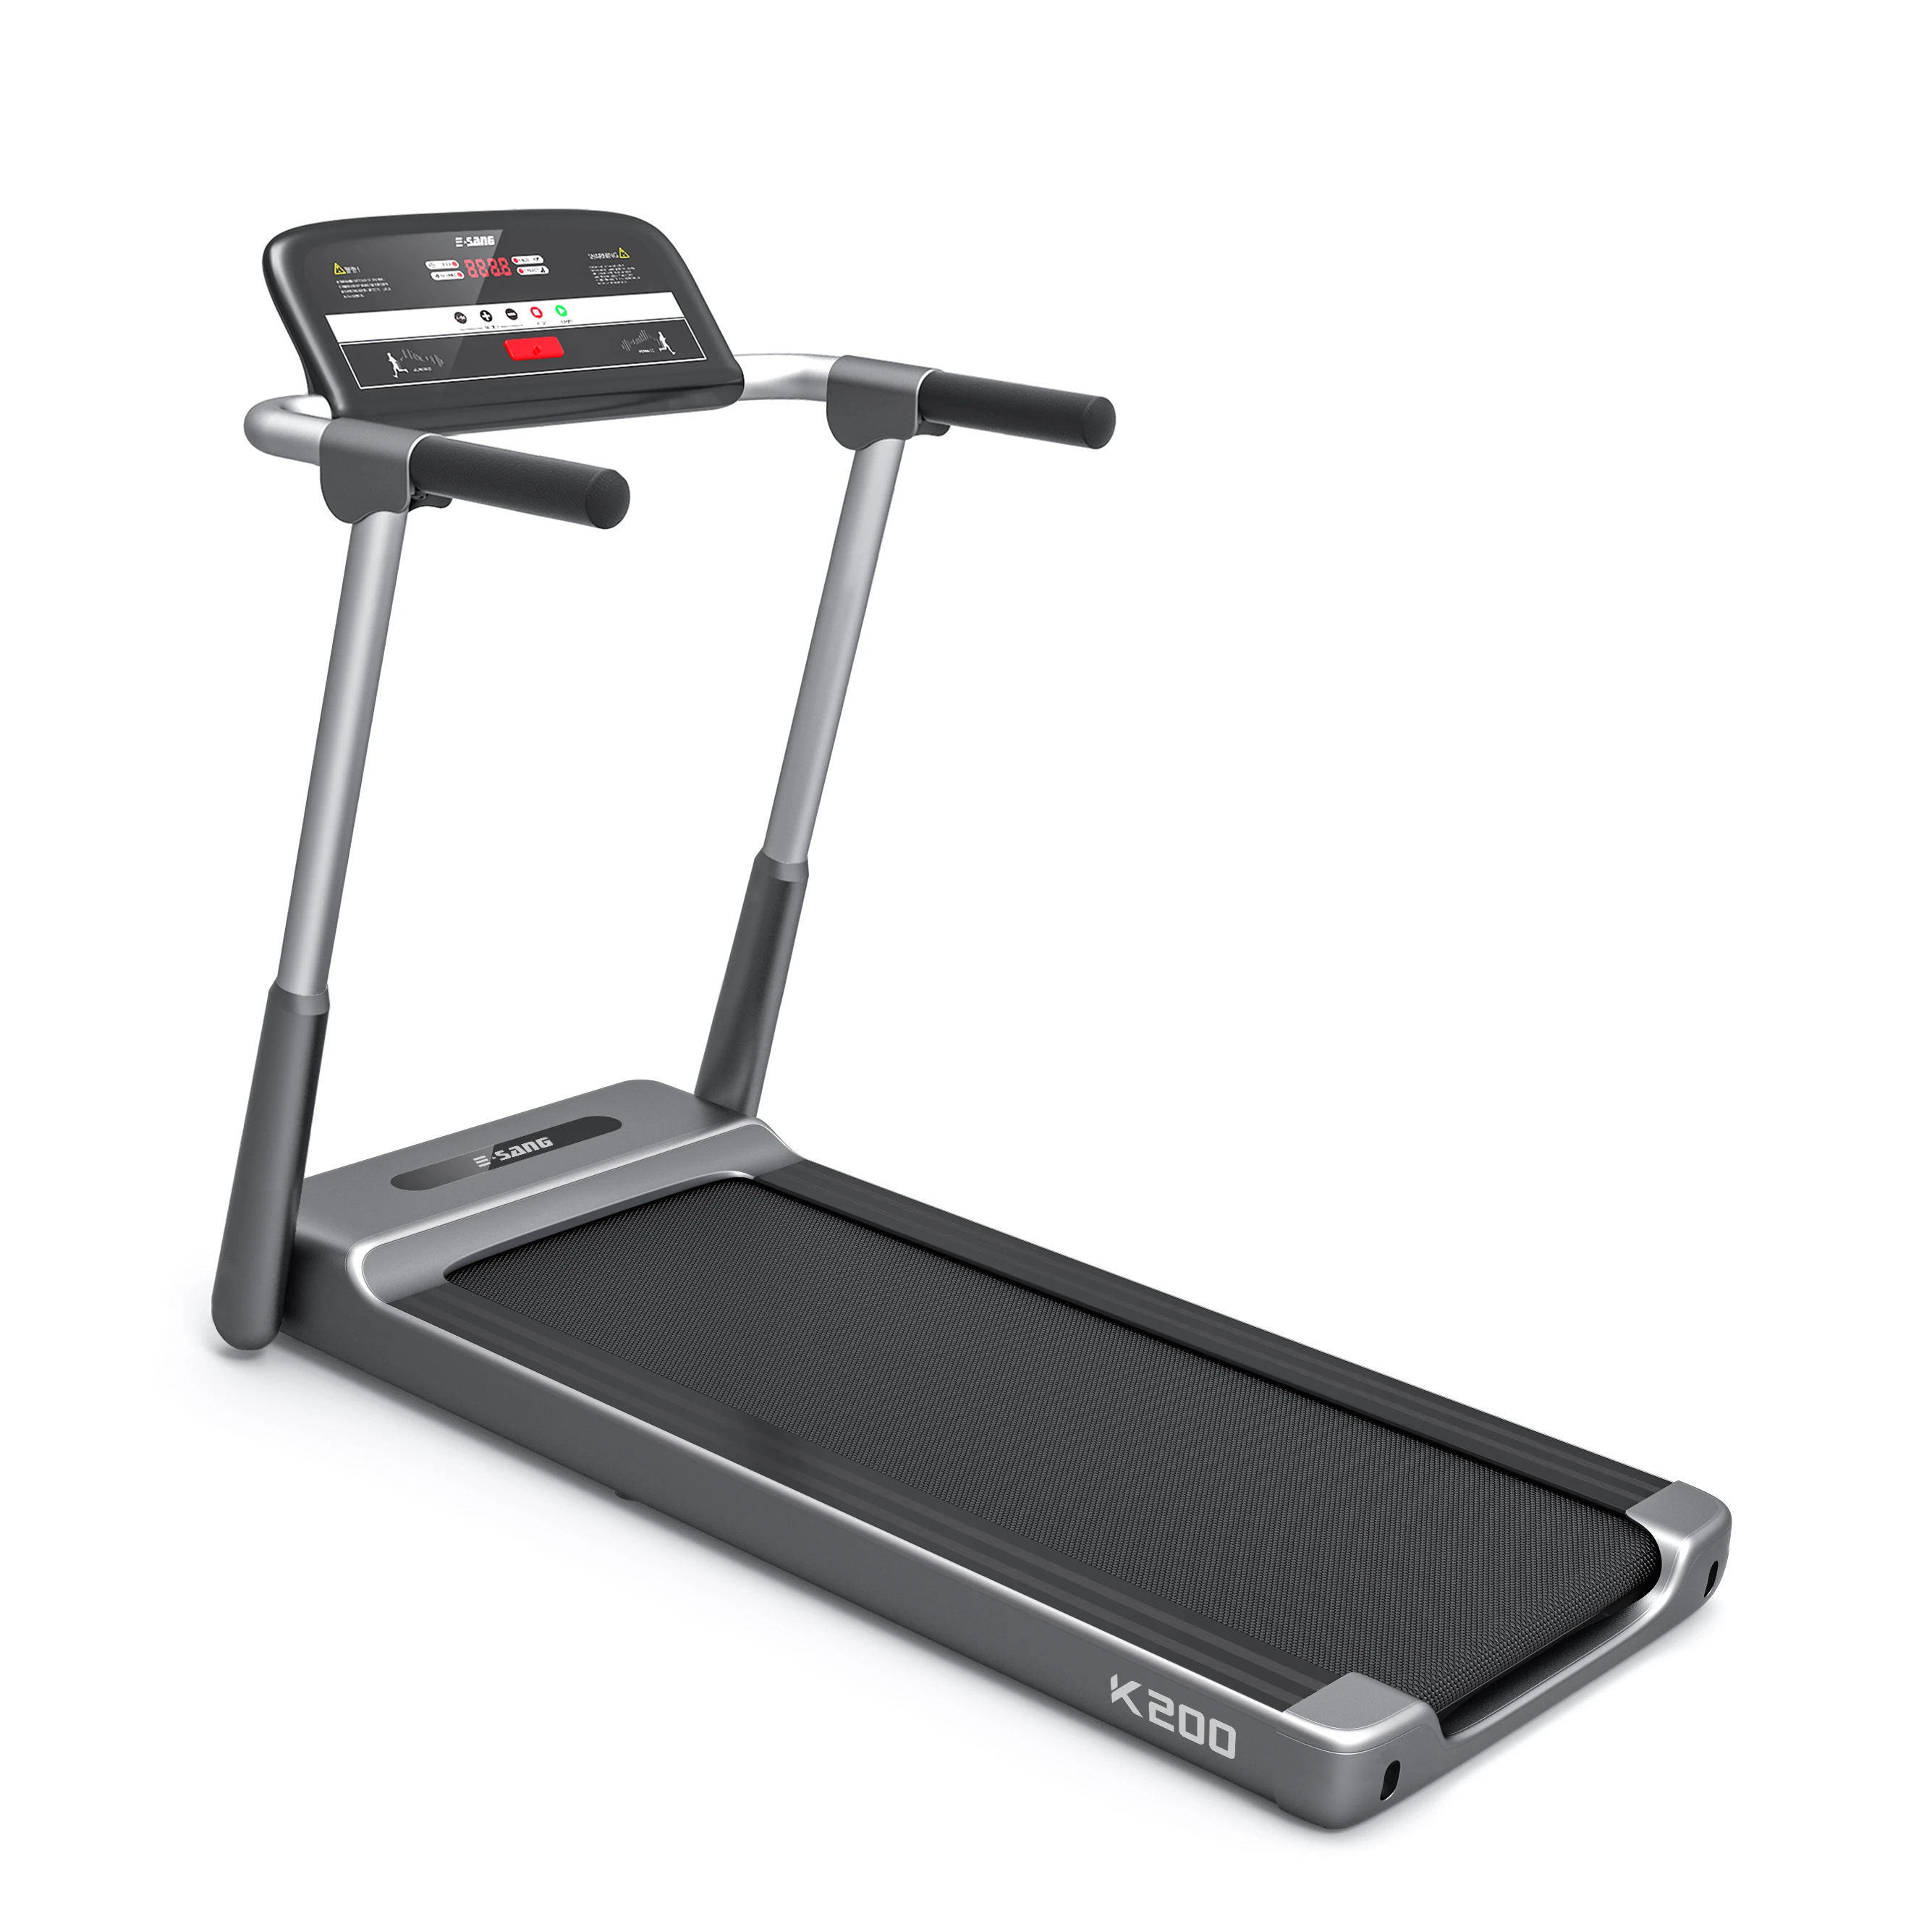 

ESANG New arrival T4005 foldable treadmill running machine electric walking motorized treadmill